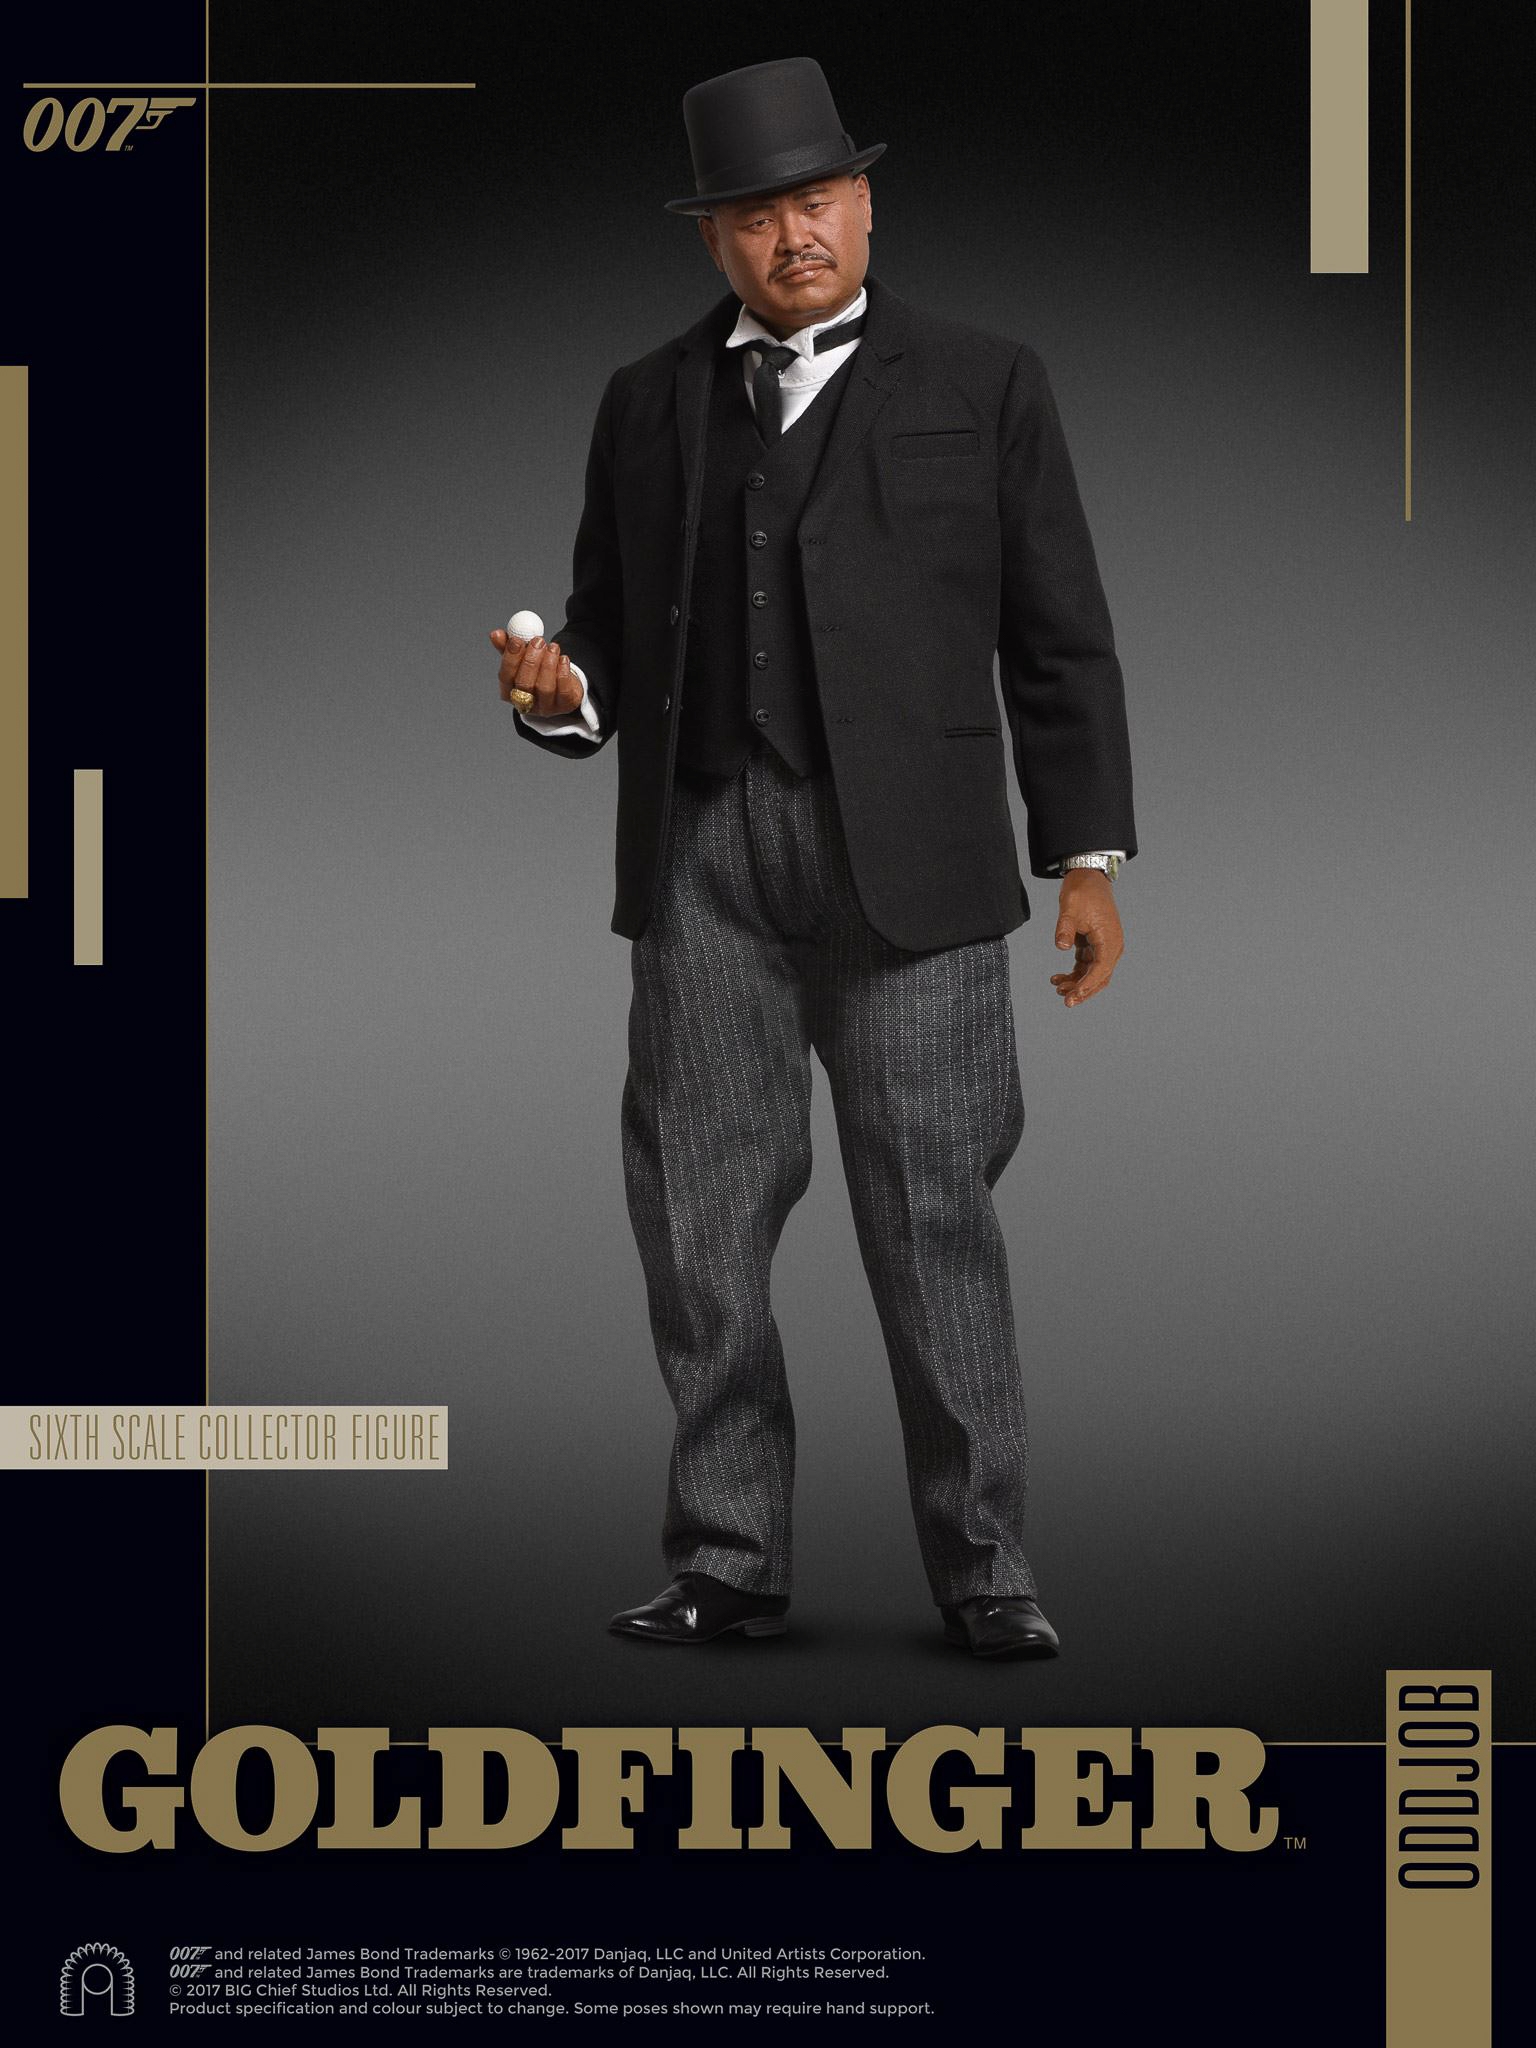 Big-Chief-James-Bond-Goldfinger-Oddjob-Full-Reveal-033.jpg